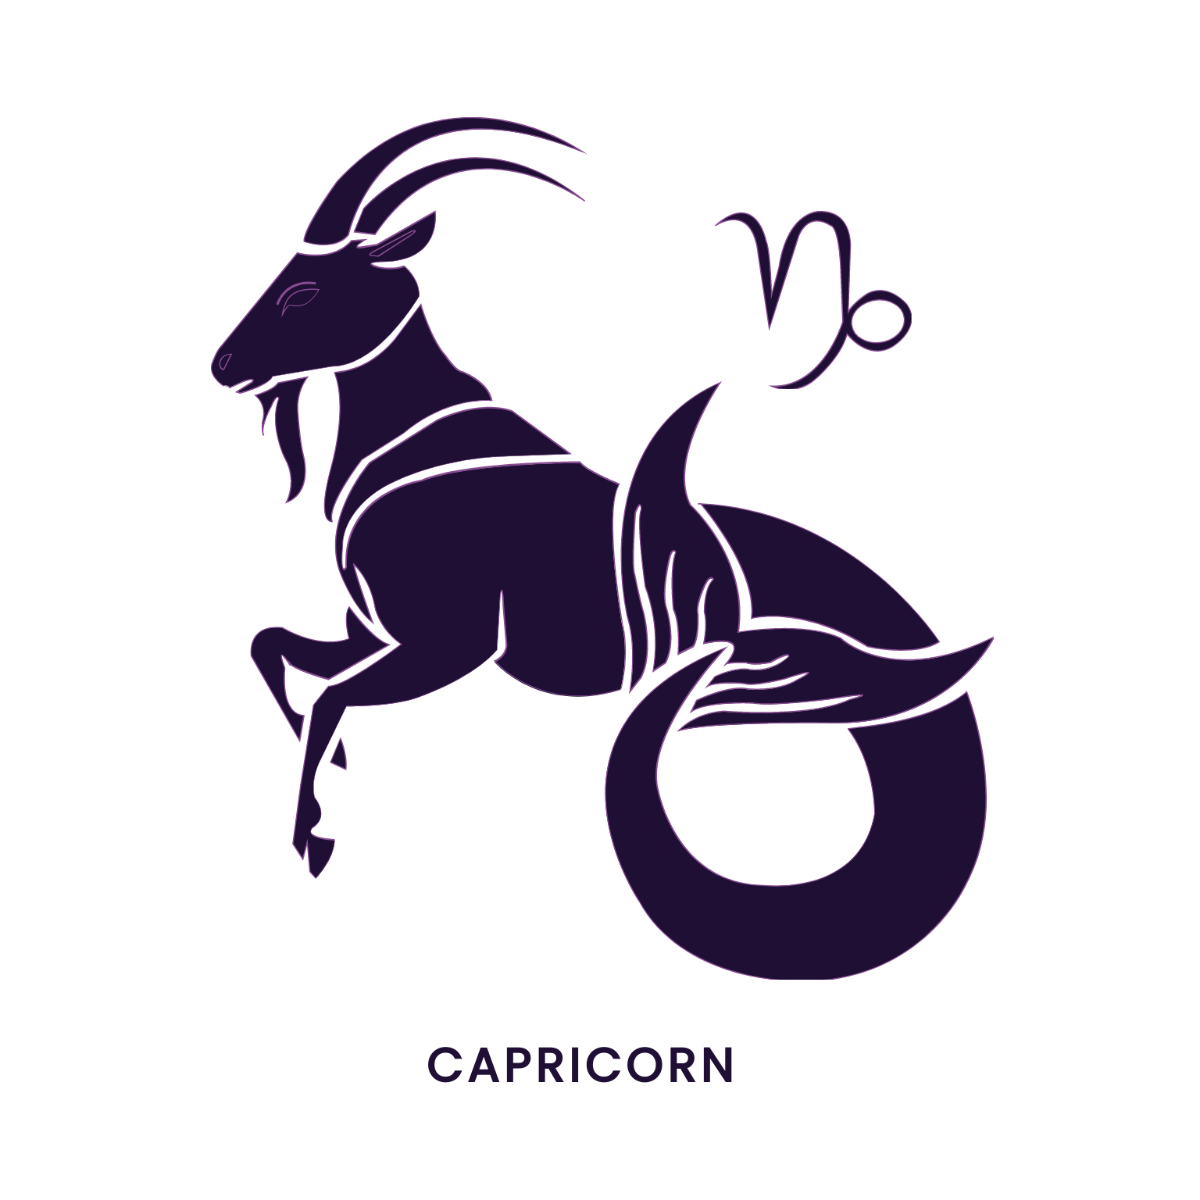 FREE Capricorn Vector - Edit Online & Download | Template.net